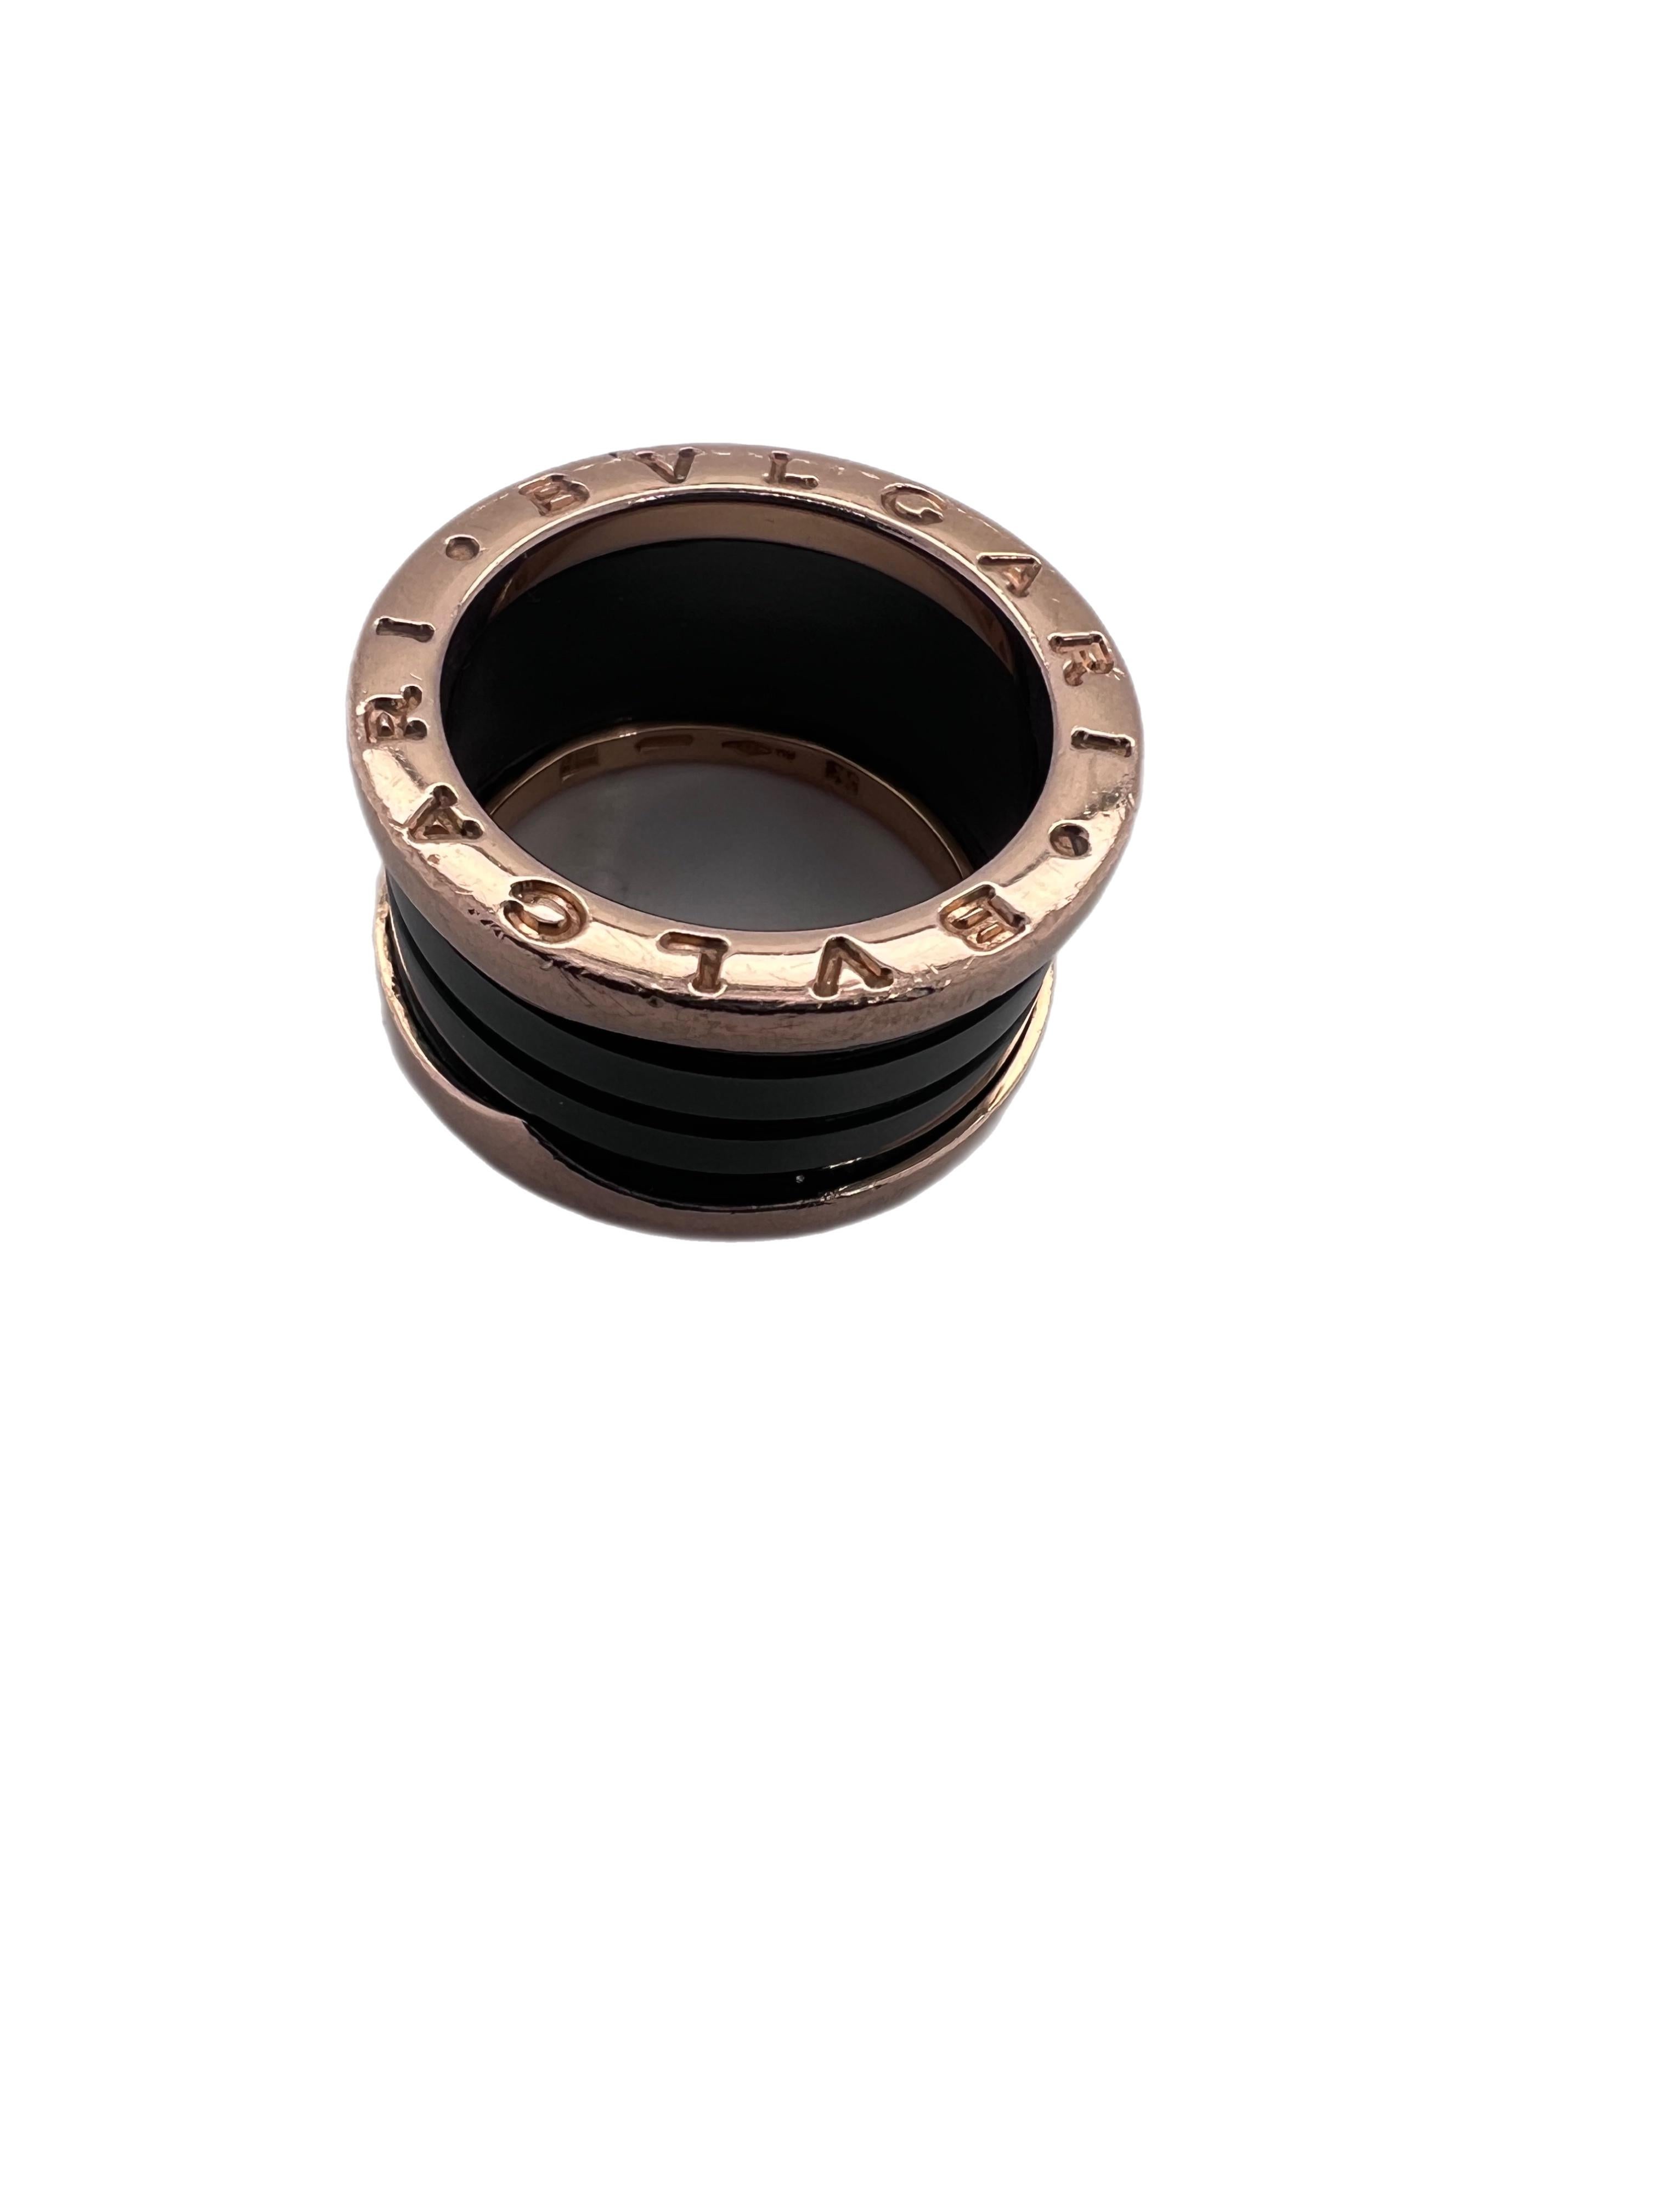 Bulgari B-Zero rose gold black ceramic ring model number 346523 For Sale 1